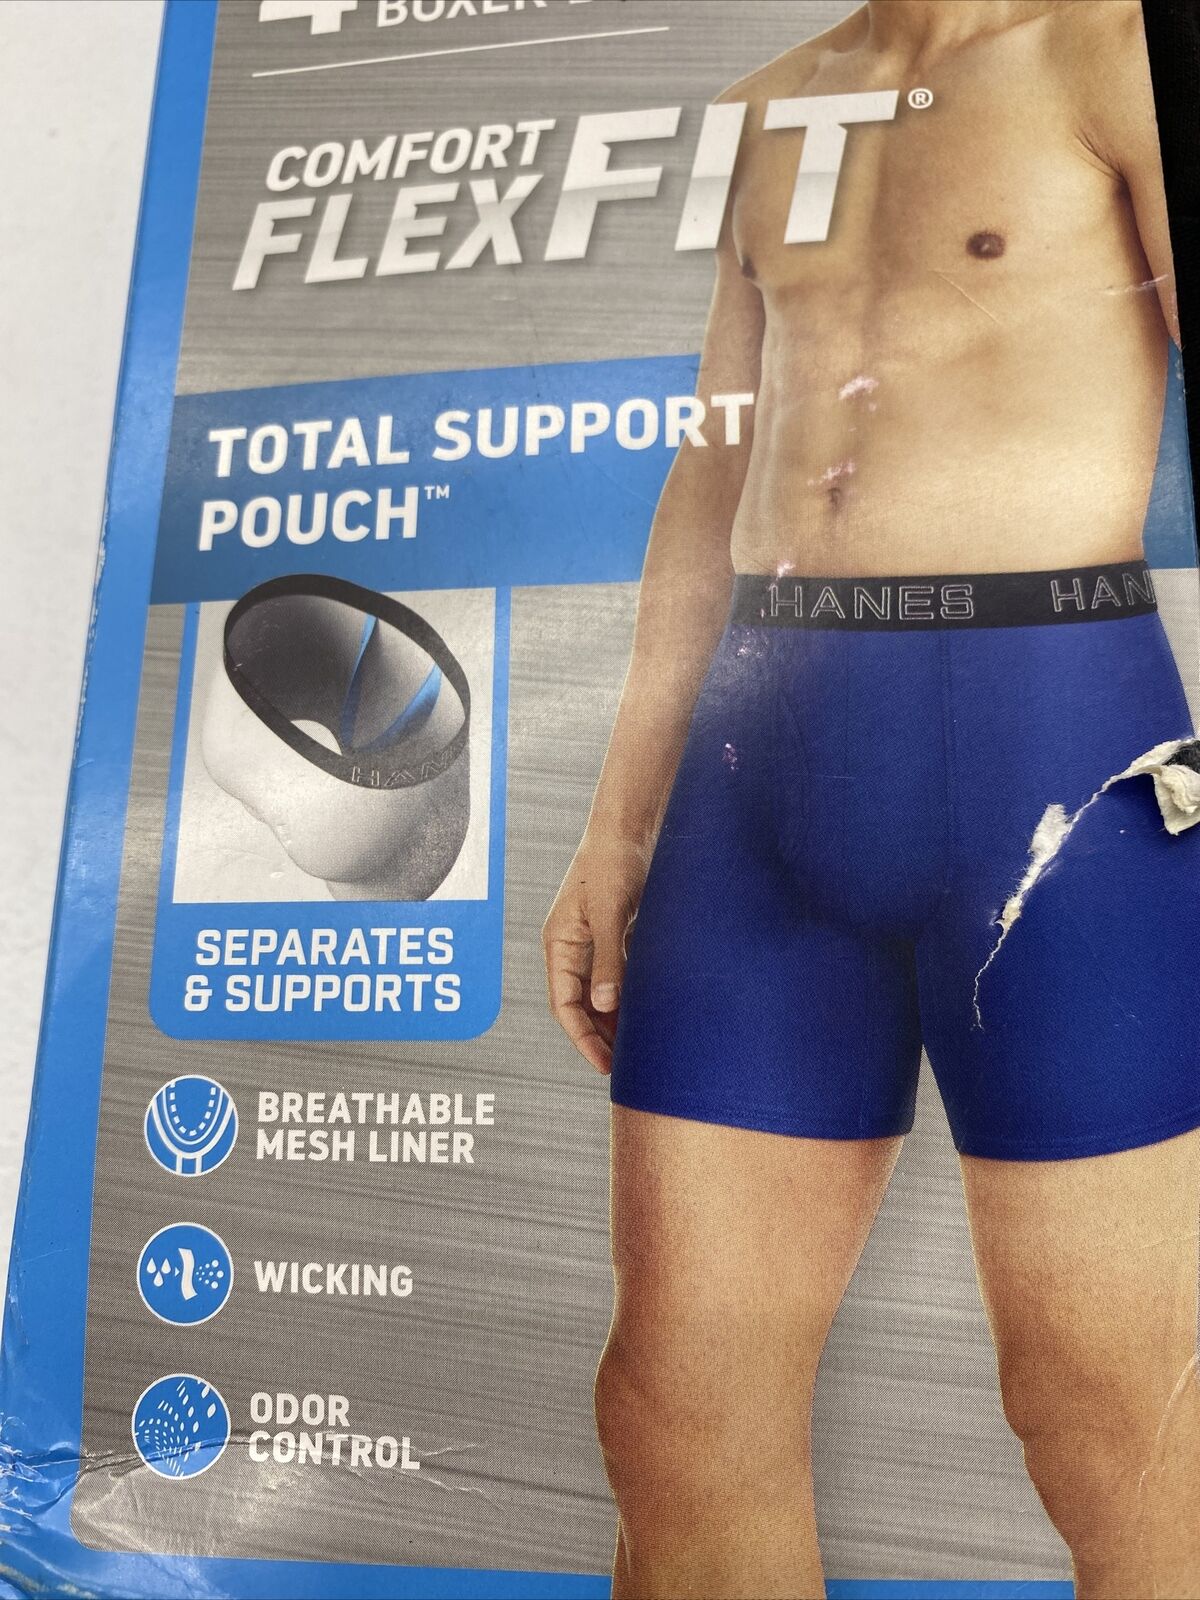 HANES Men's Ultimate Comfort Flex Fit Total Support Pouch Boxer